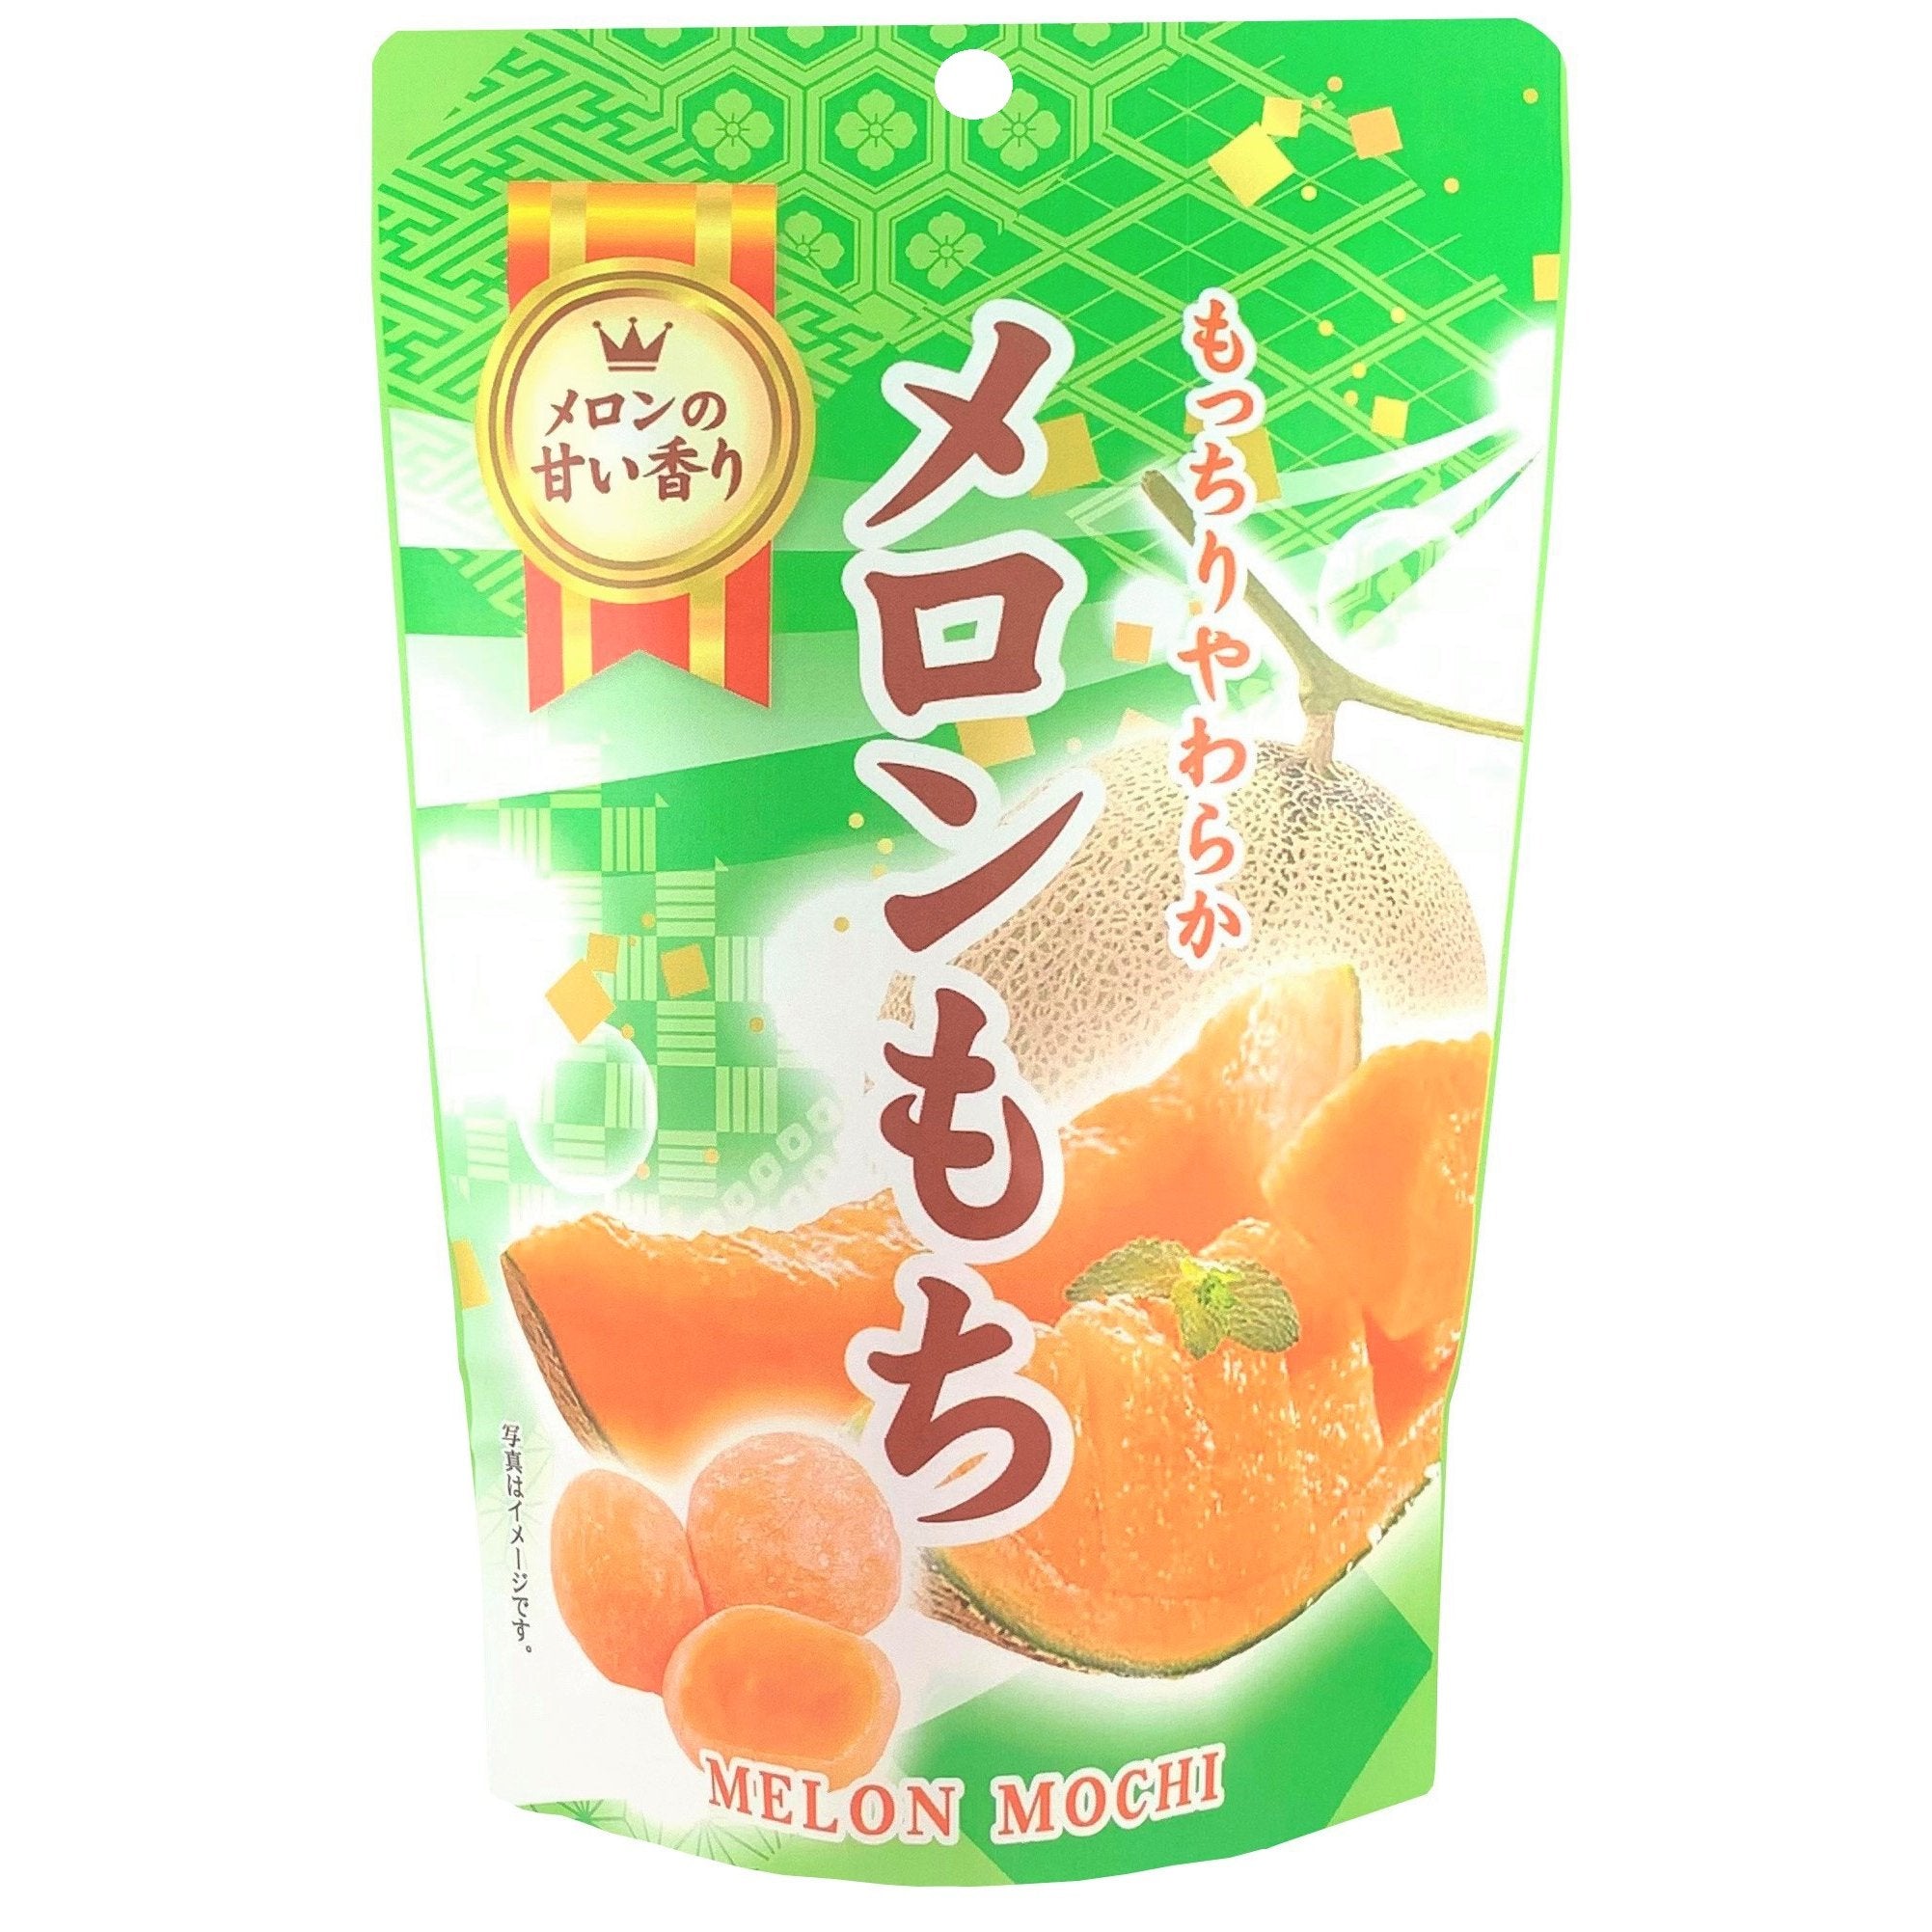 Seiki Bite Sized Mochi Snack Japanese Melon Flavor 130g